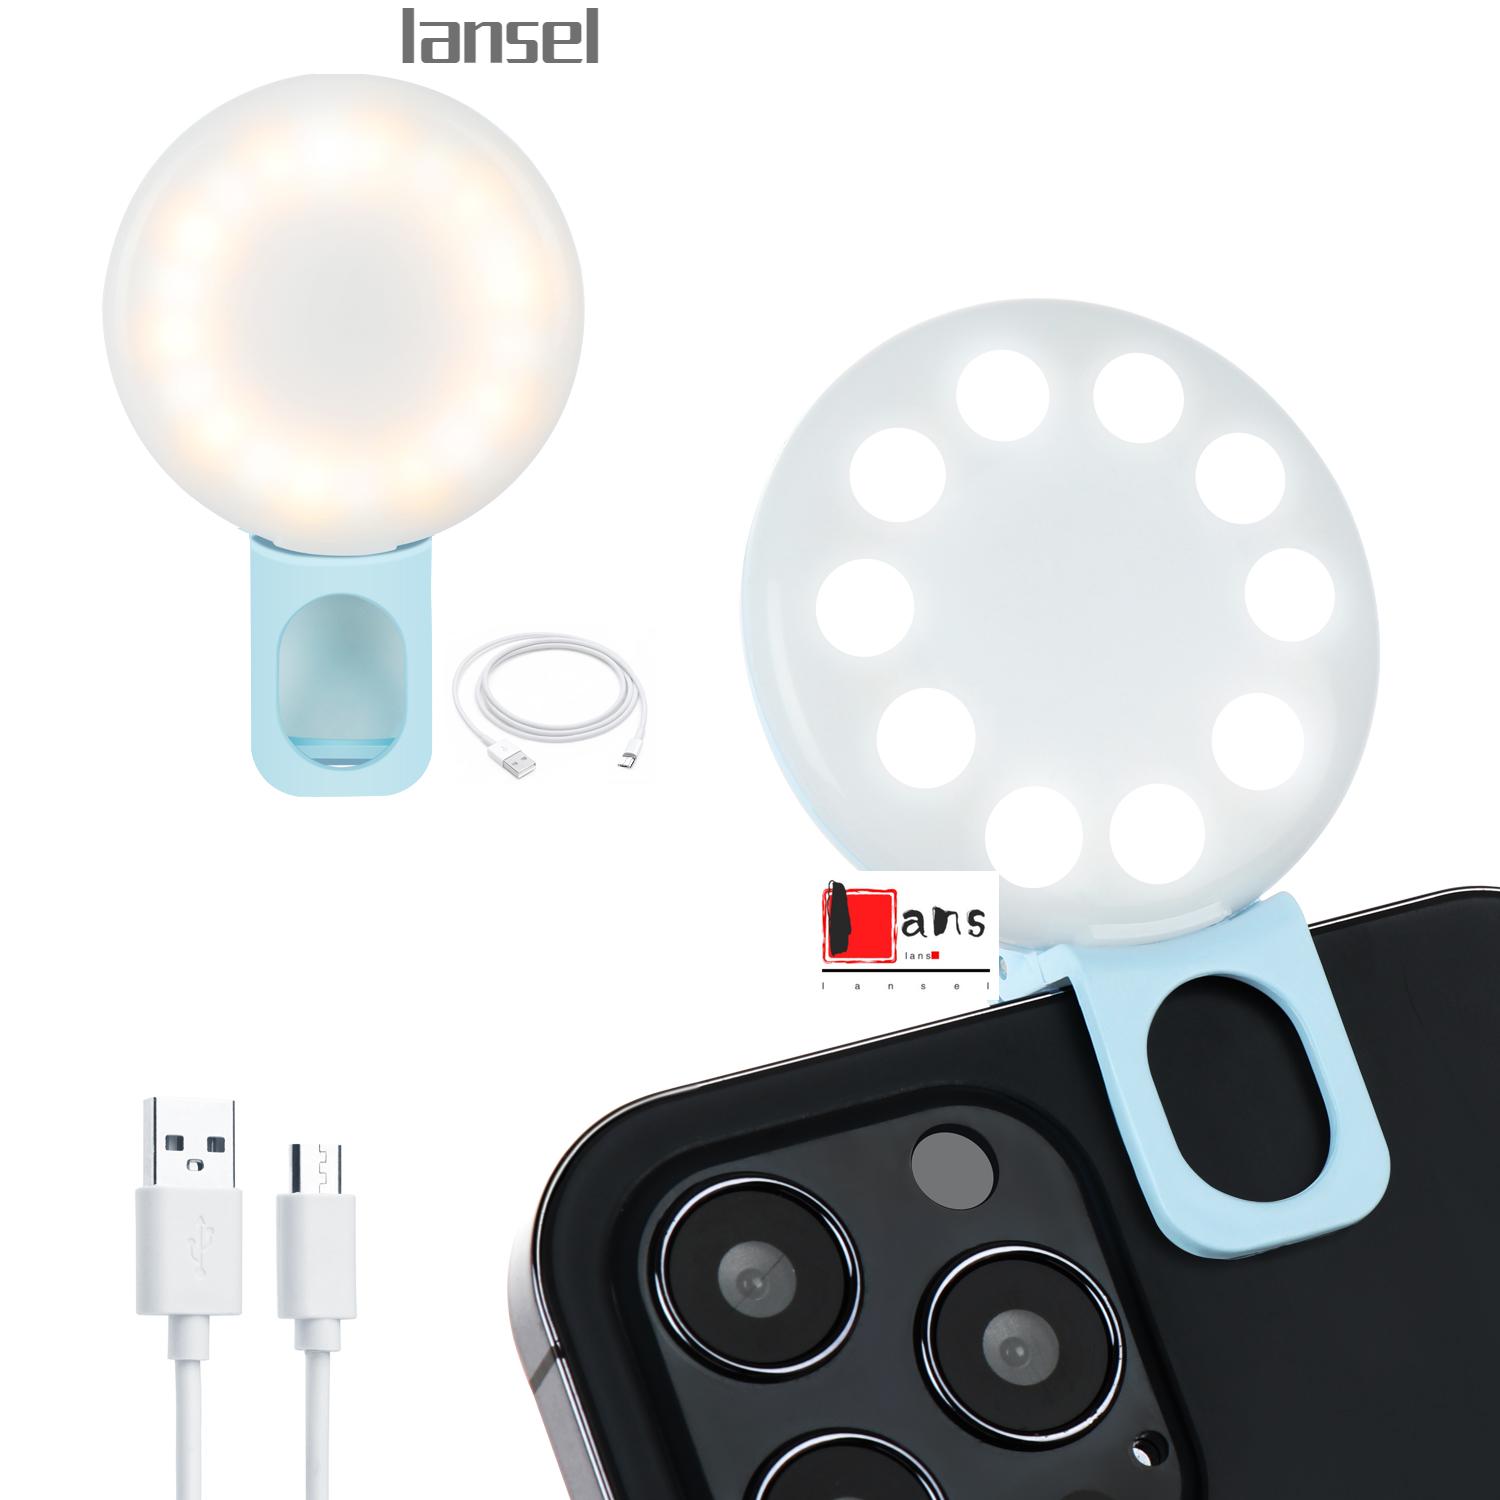 ❤LANSEL❤ 2PCS Cell-phone Clip On Ring Light Luminous Selfie Lamp Mobile Phone Universal LED Ring Flash Photographic Lights Gifts USB Mini